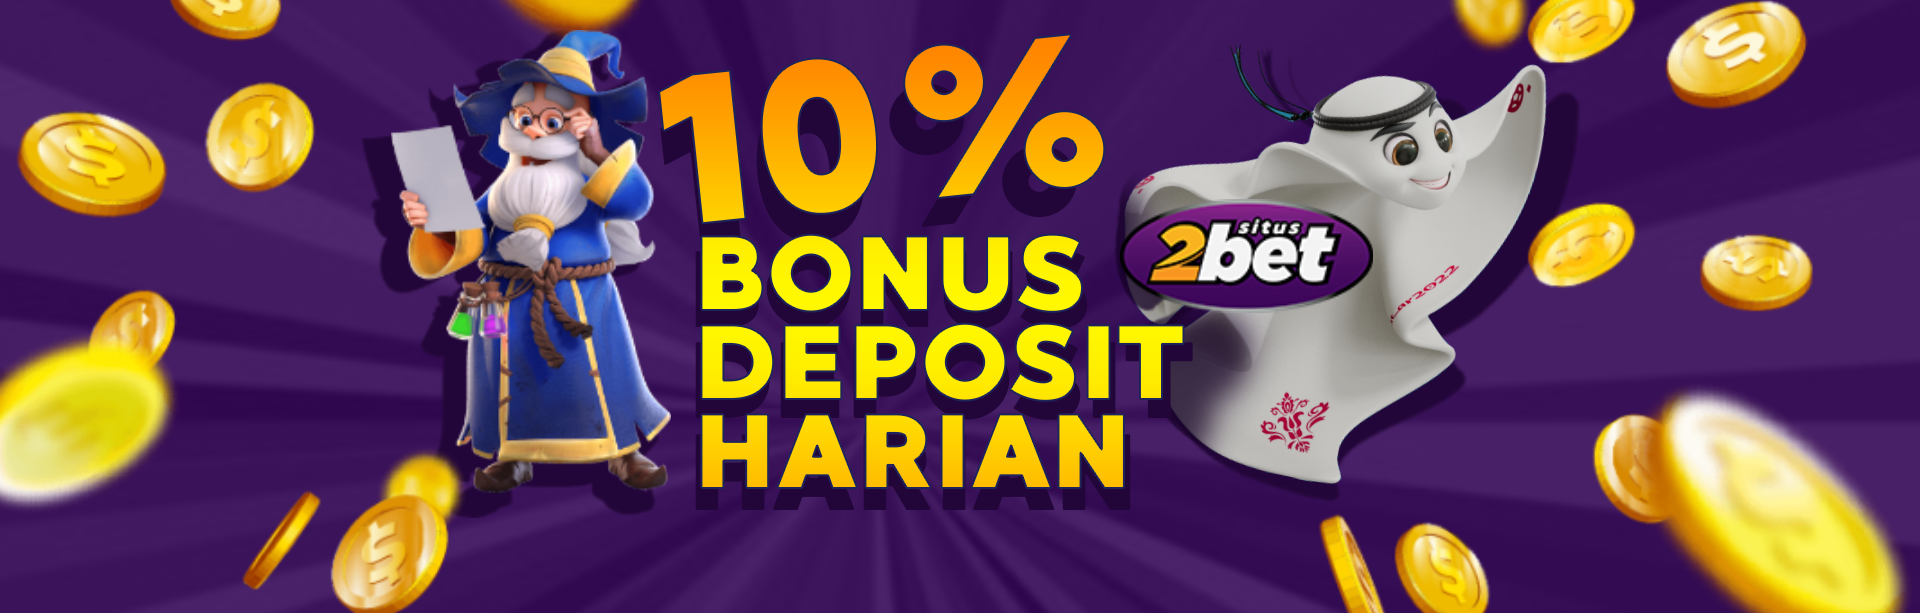 Deposit Harian